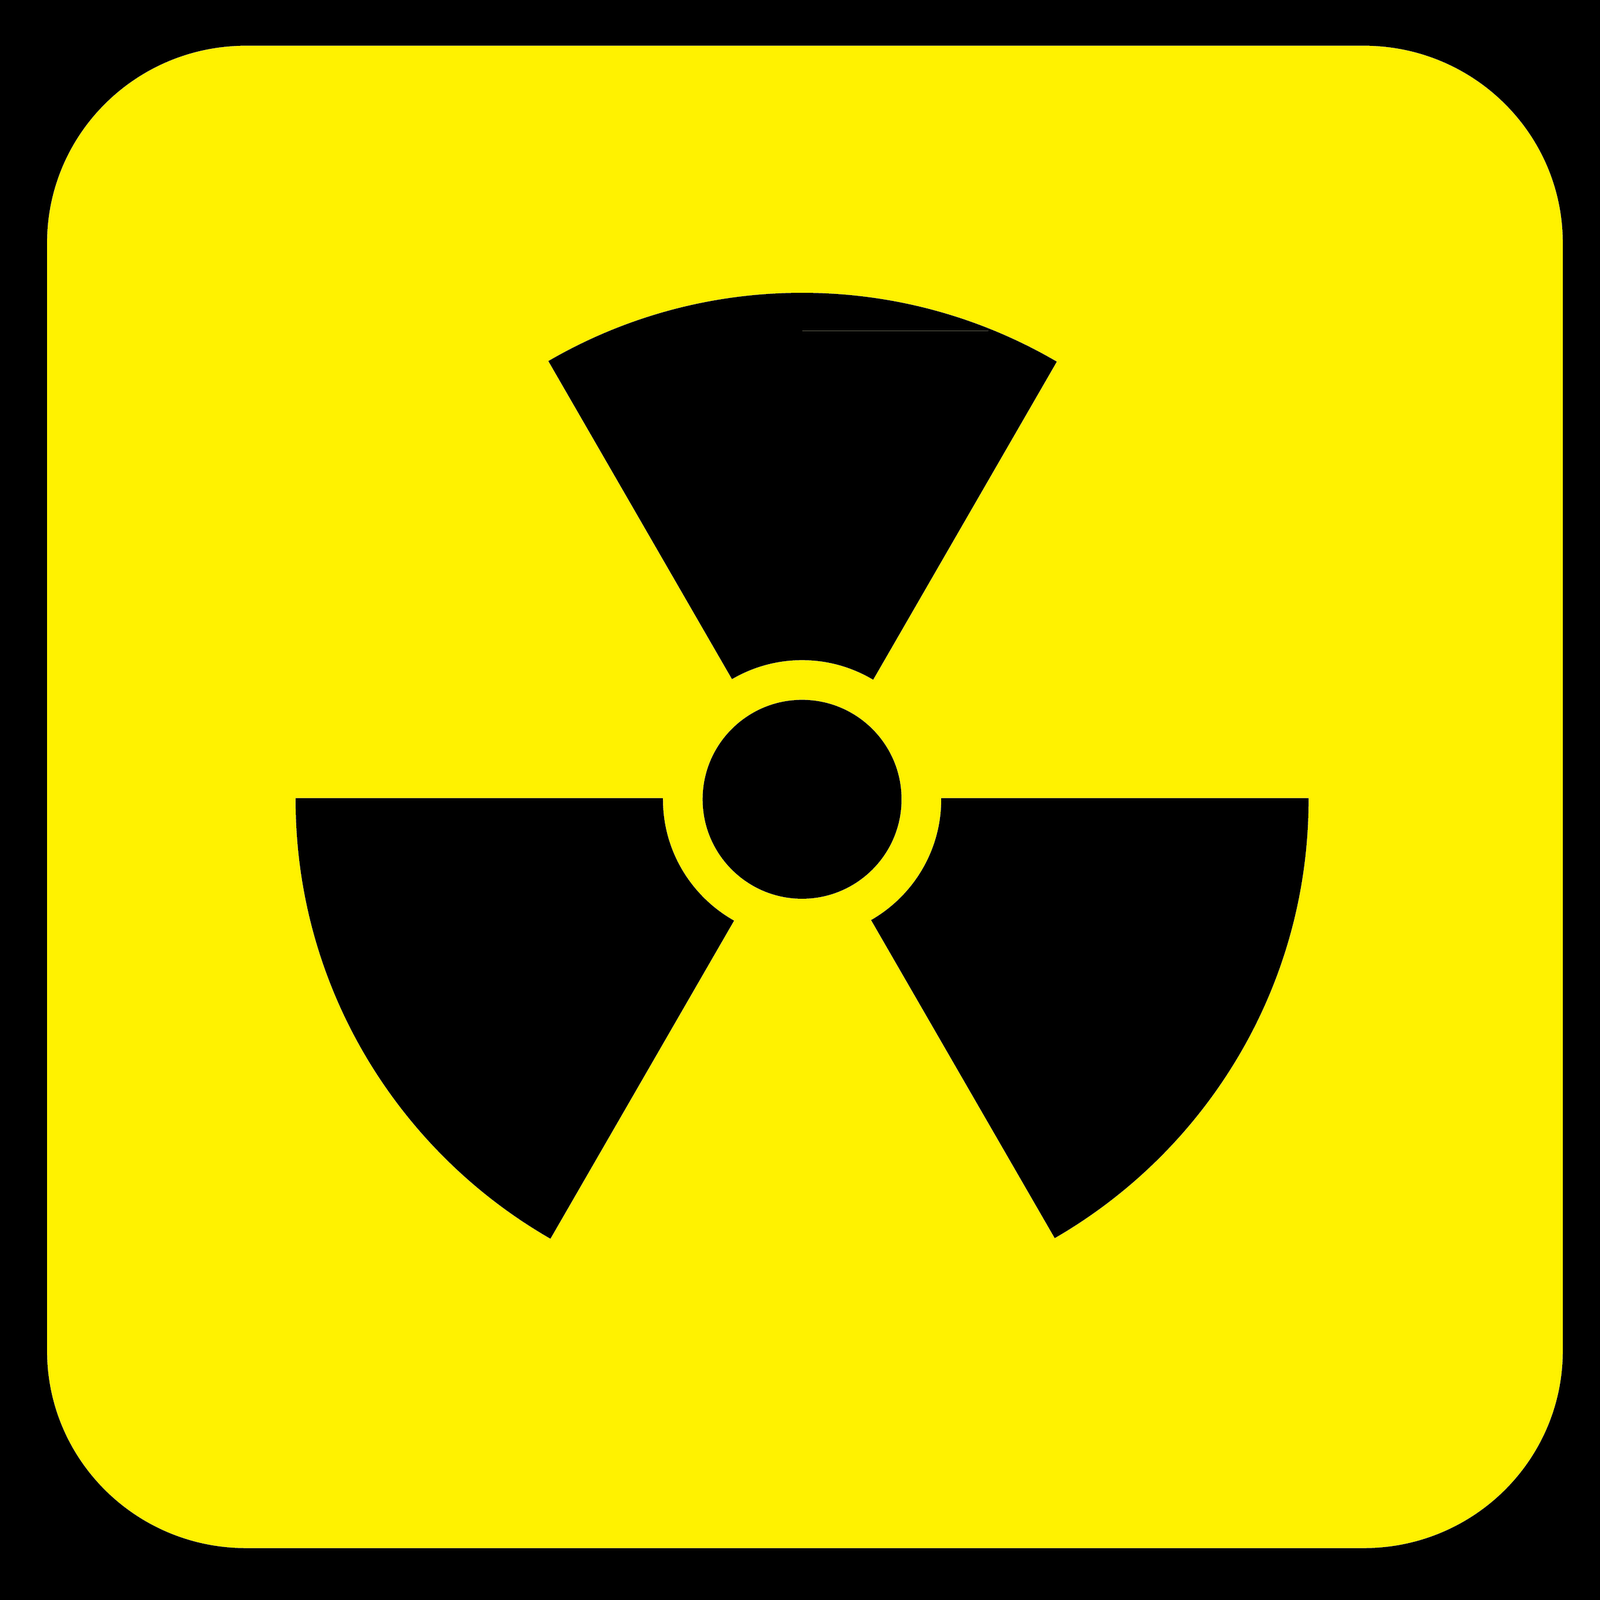 Nuclear power | Nuclear power plant | How nuclear power works